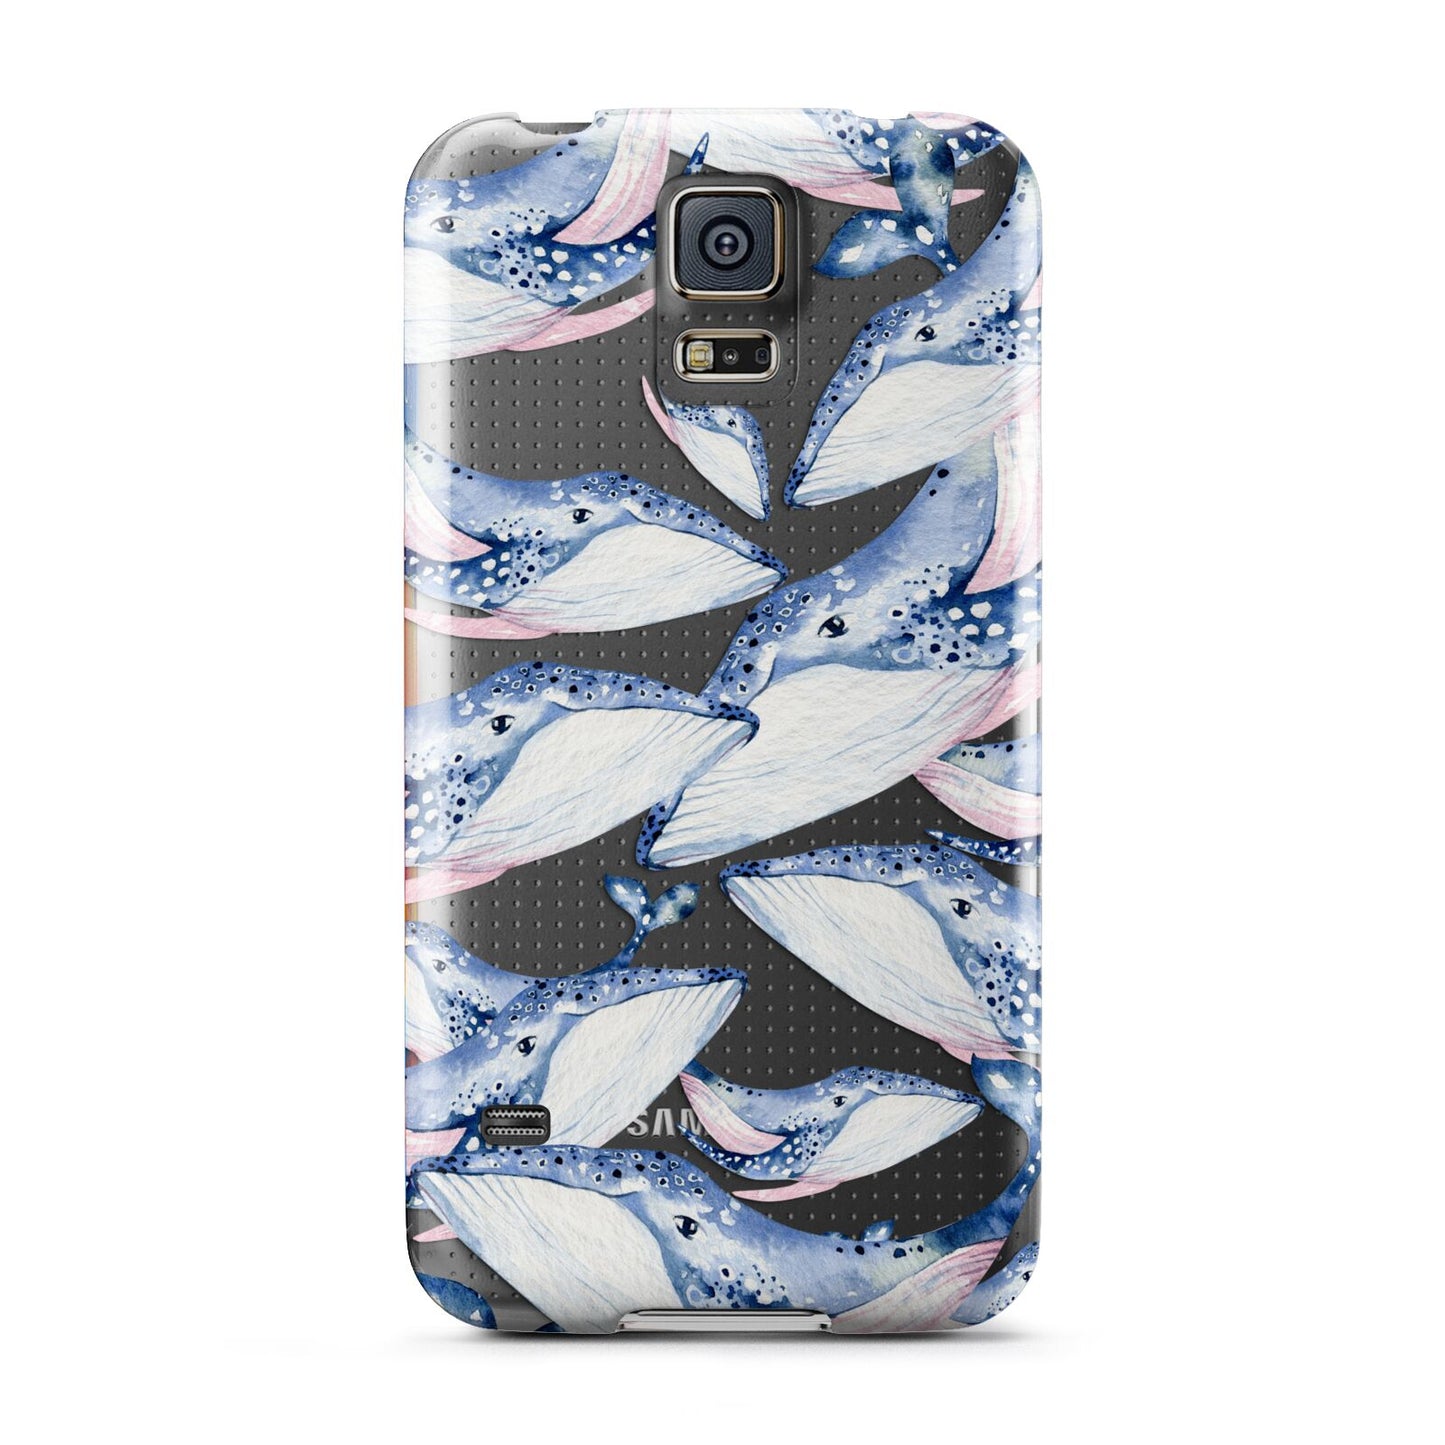 Whale Samsung Galaxy S5 Case